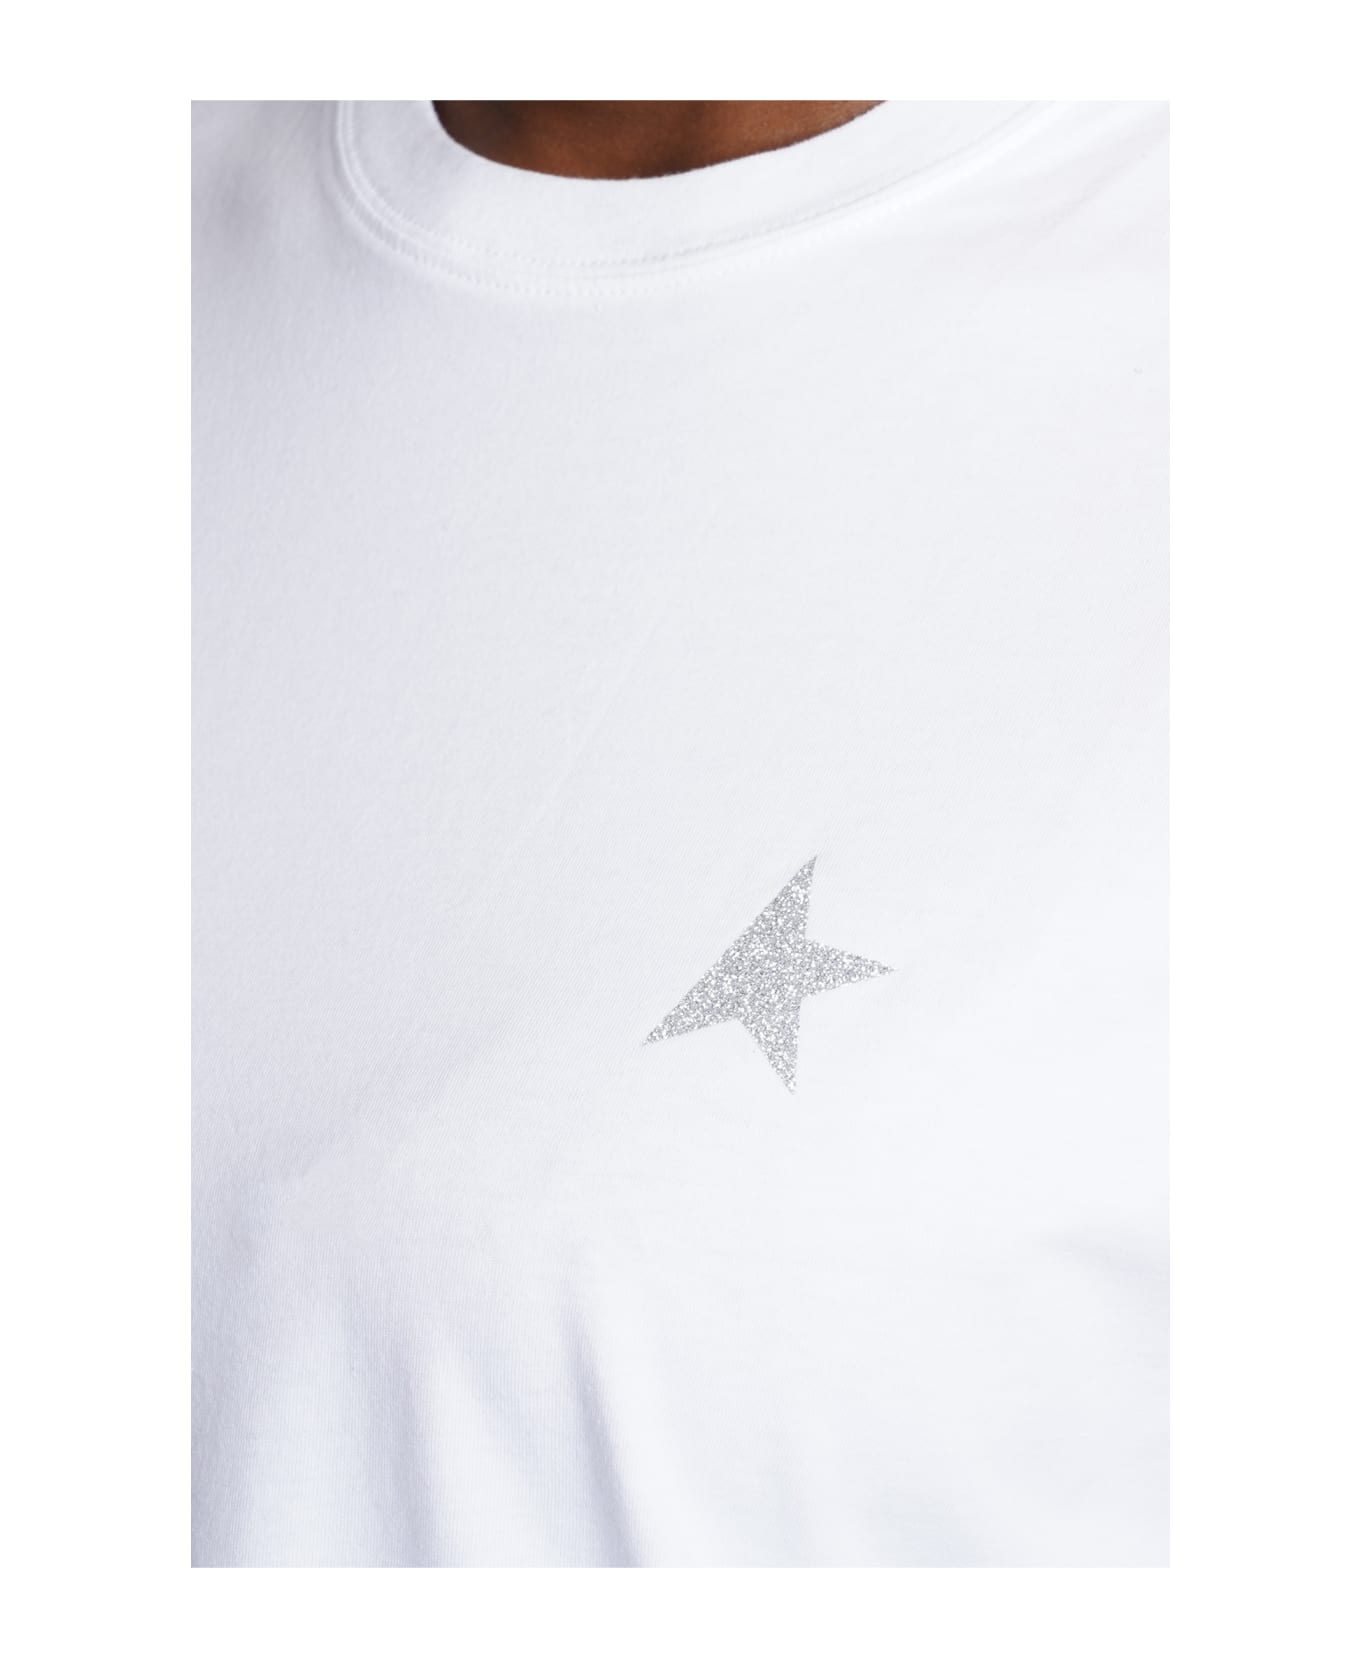 Golden Goose Star T-shirt In White Cotton